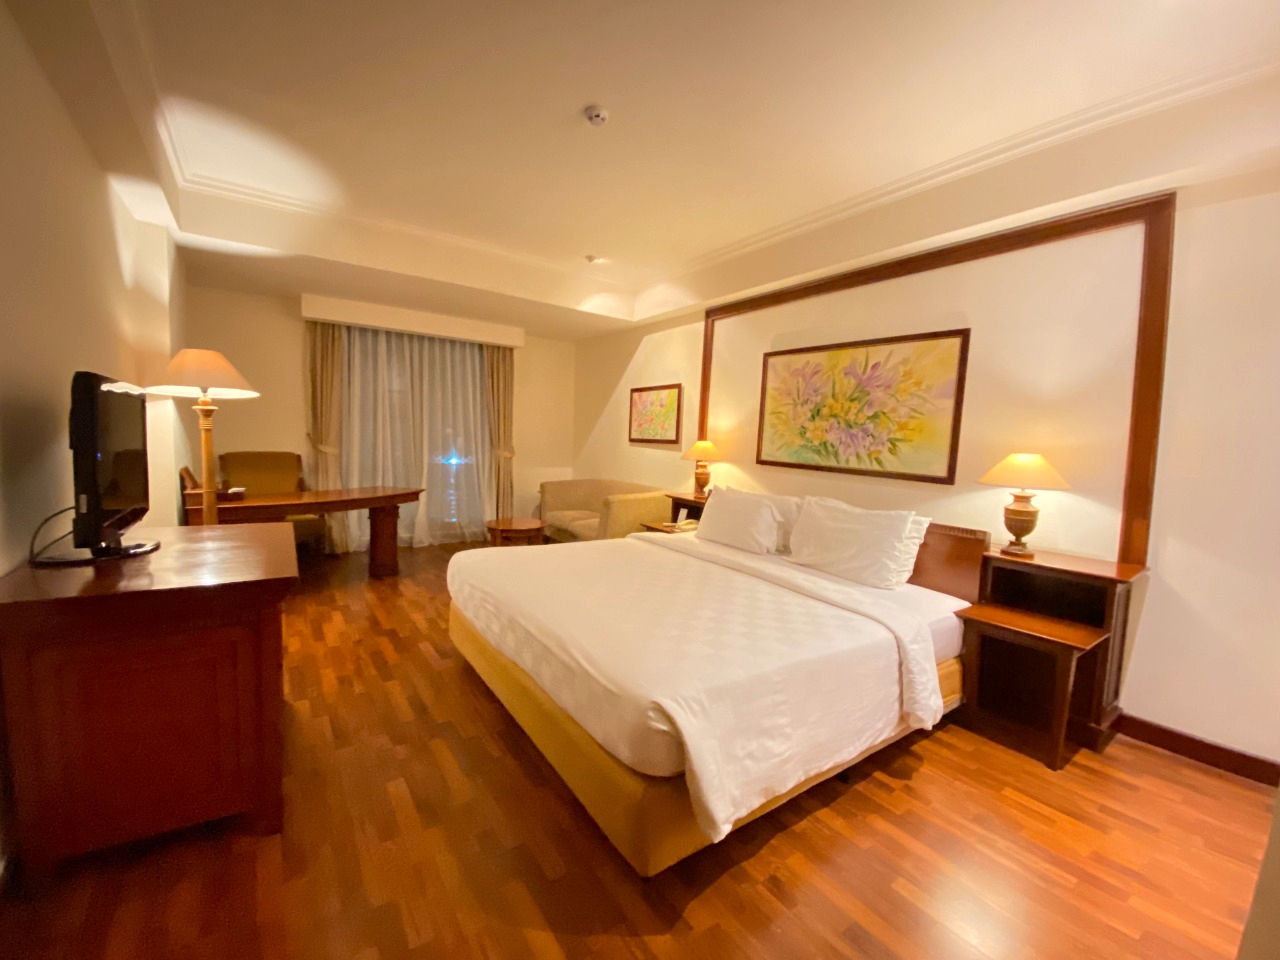 Bedroom 4, Arion Suites Hotel Bandung, Bandung